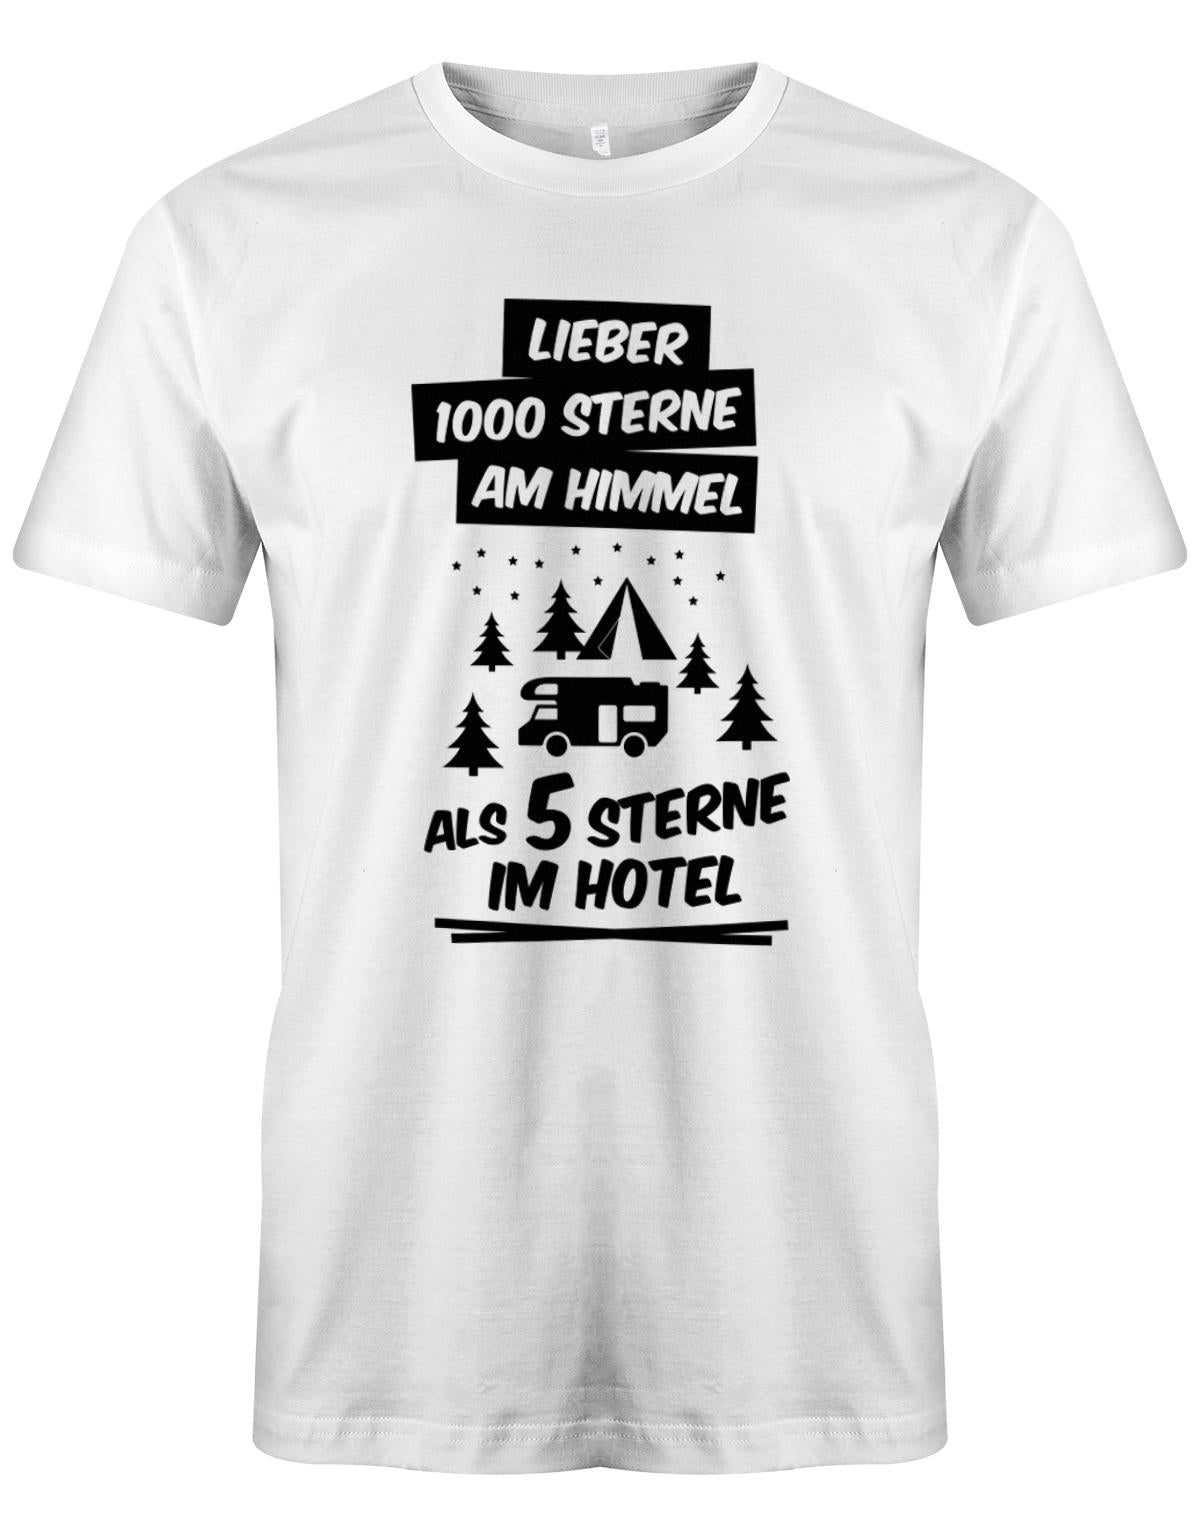 Lieber-1000-Sterne-am-Himmel-als-5-Sterne-im-hotel-Camping-Shirt-Herren-Weiss